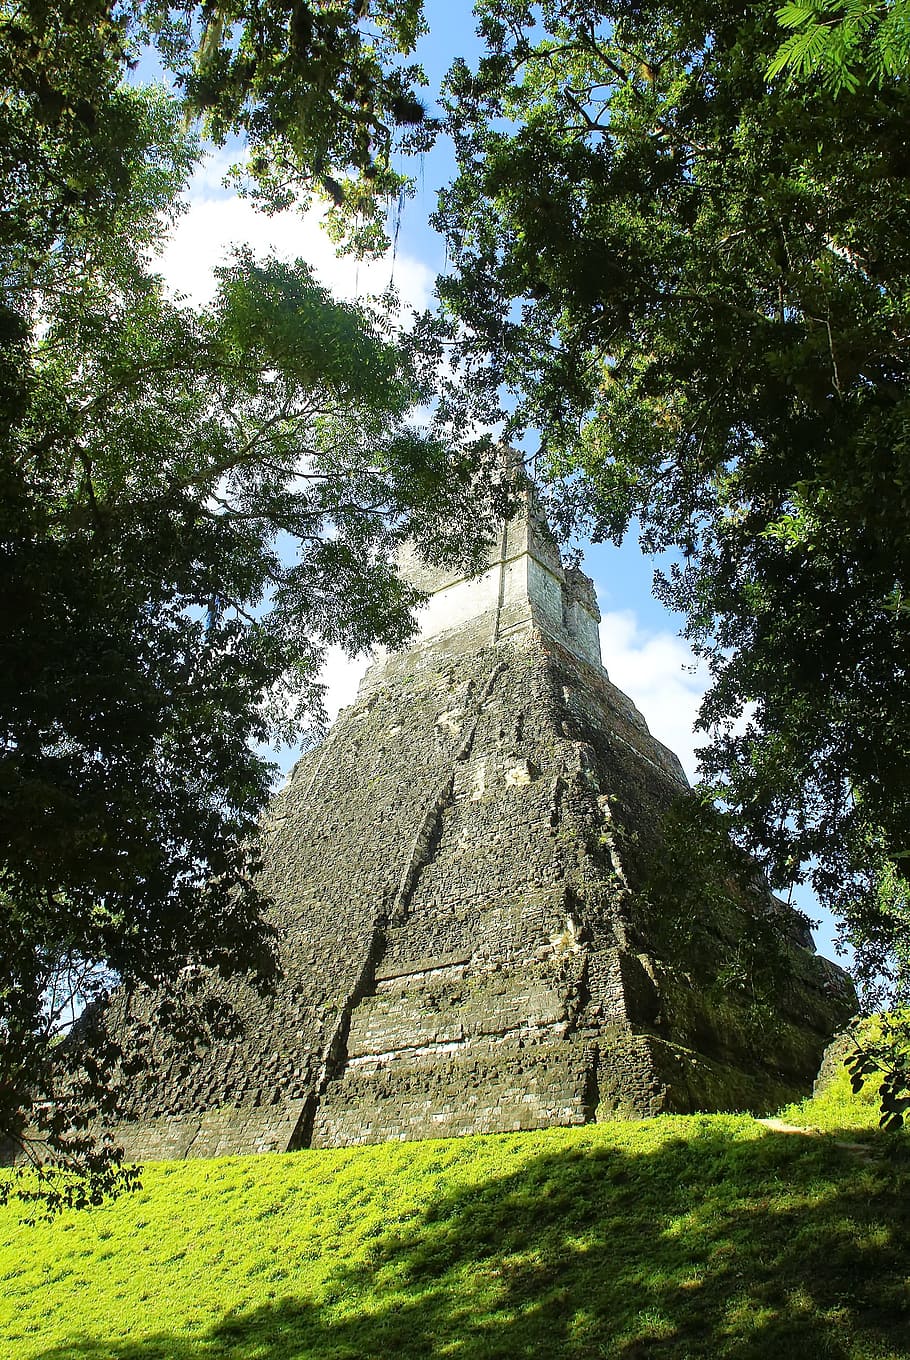 guatemala, tikal, maya, columbian civilization, pyramid, great pyramid, ruins, rainforest, plant, tree